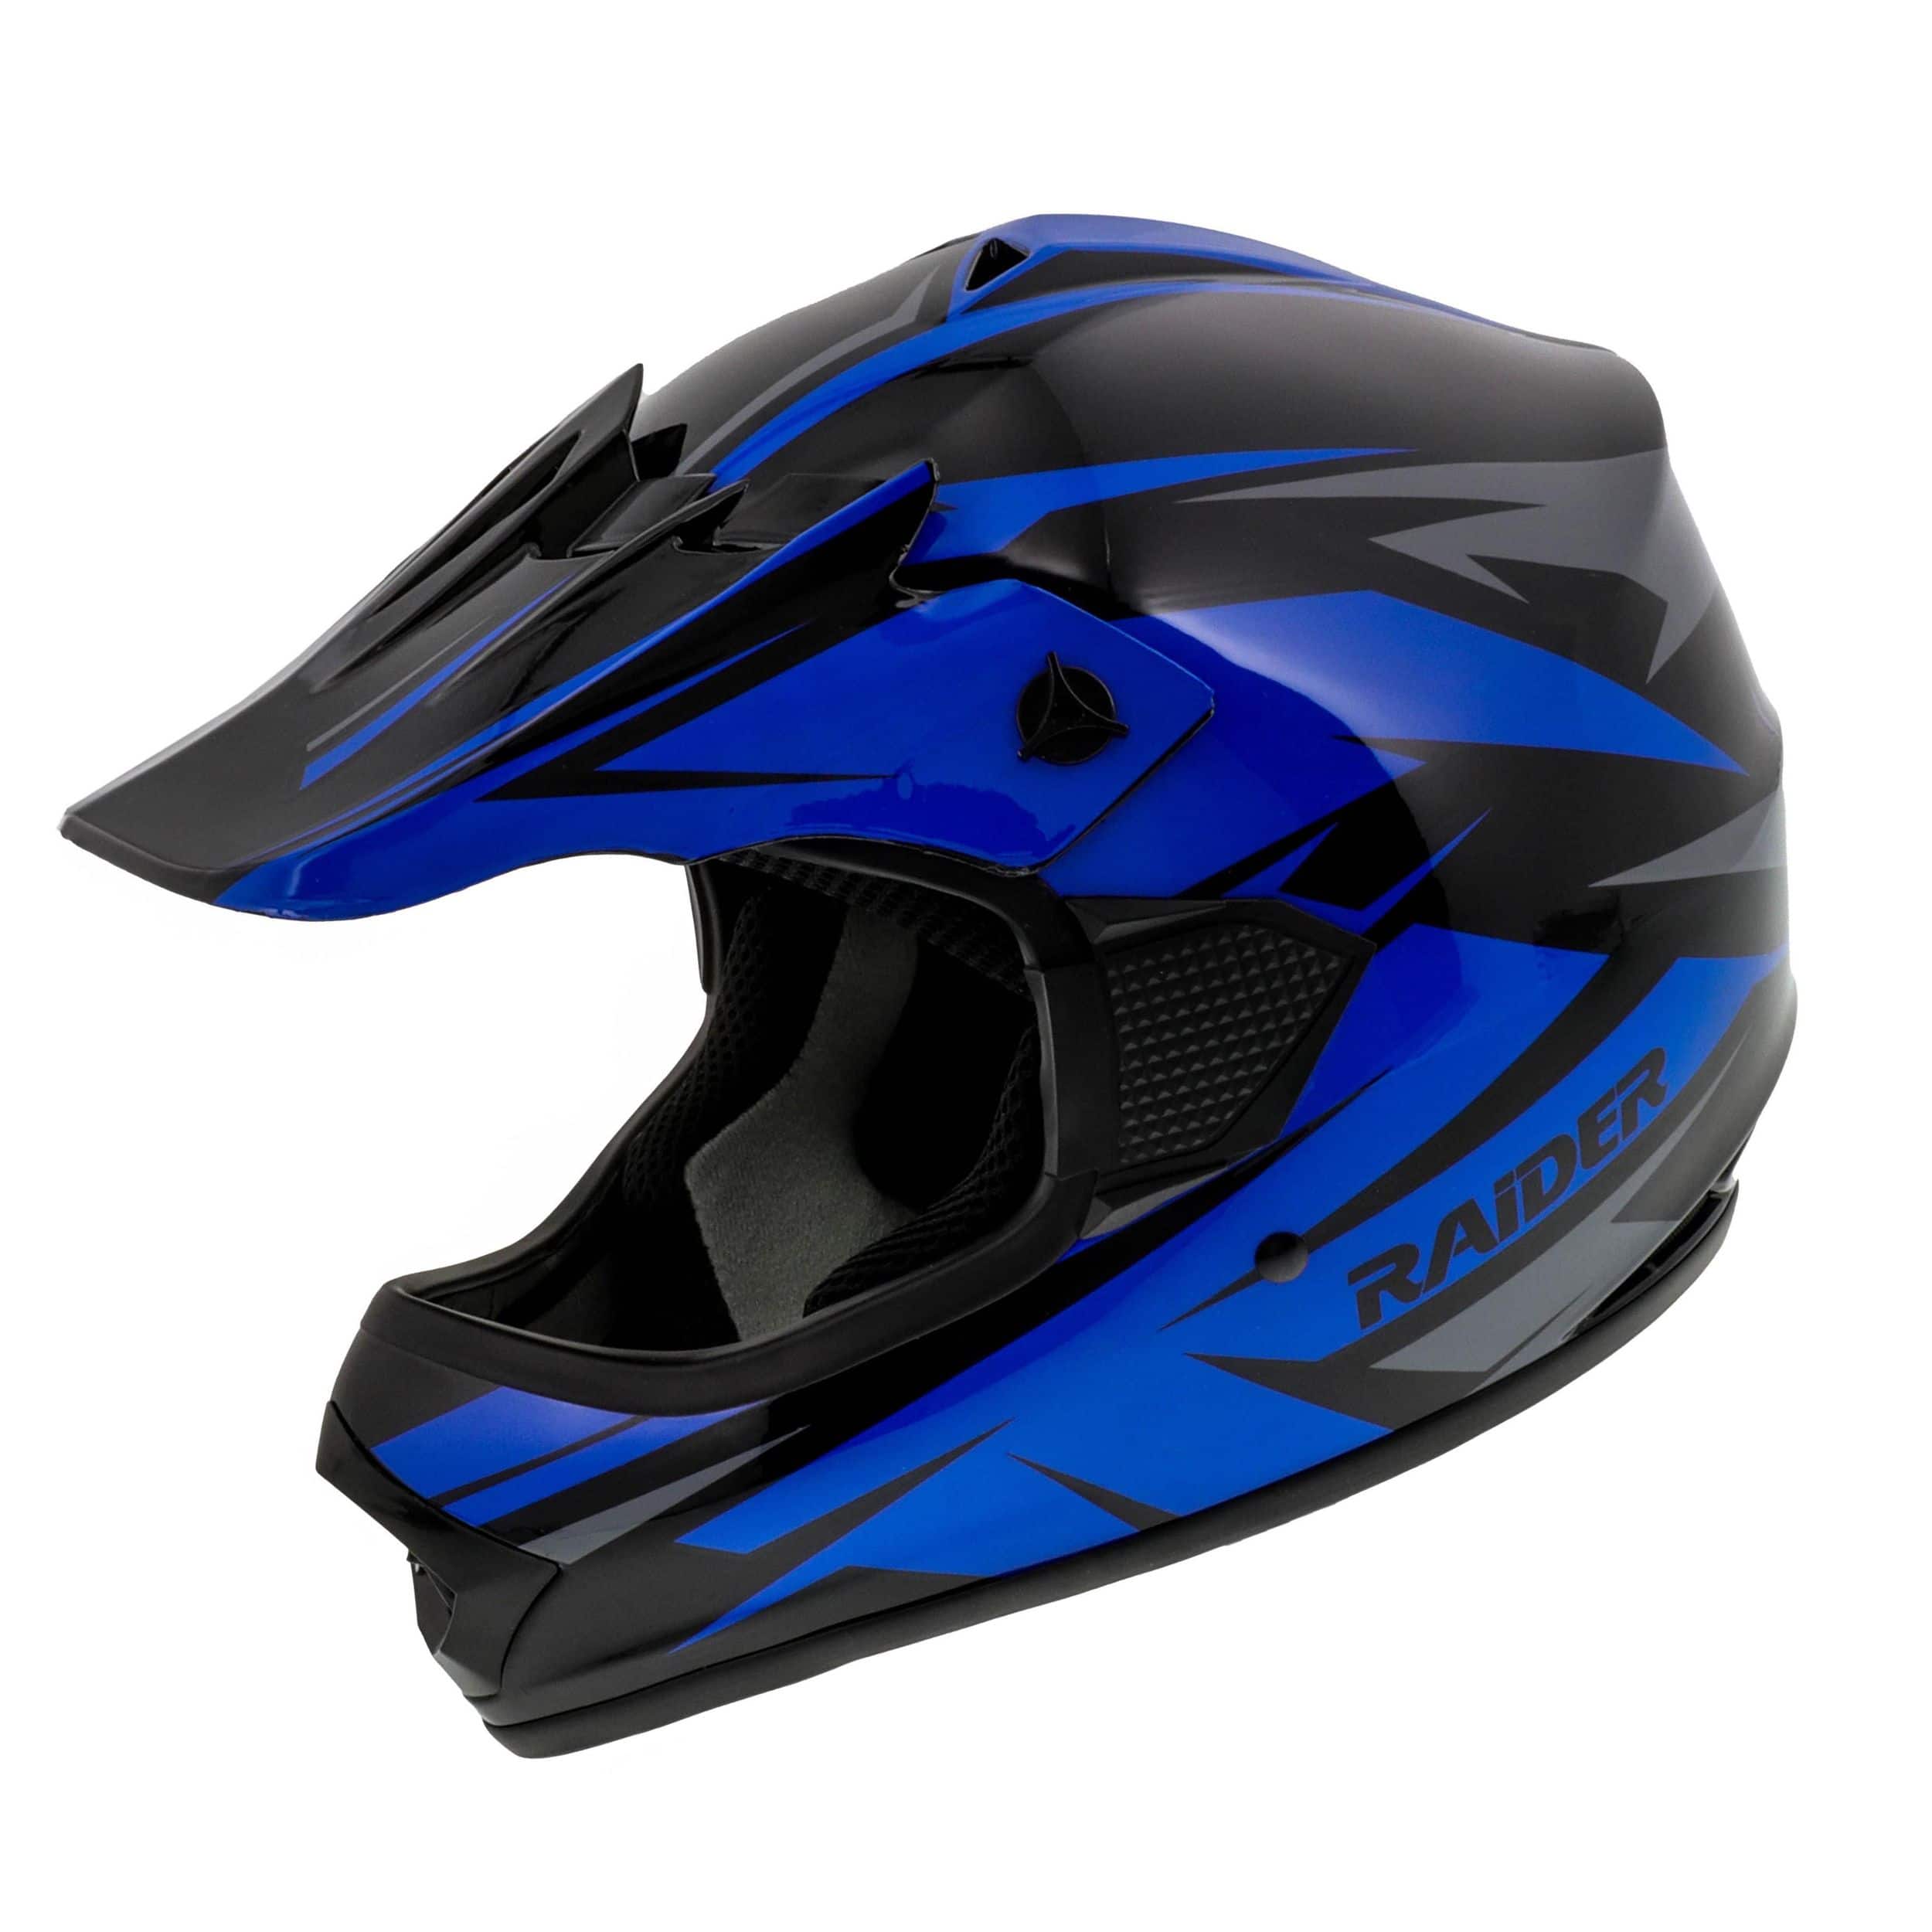 Raider GX4 ATV Helmet, Youth, Blue, Assorted Sizes | Canadian Tire